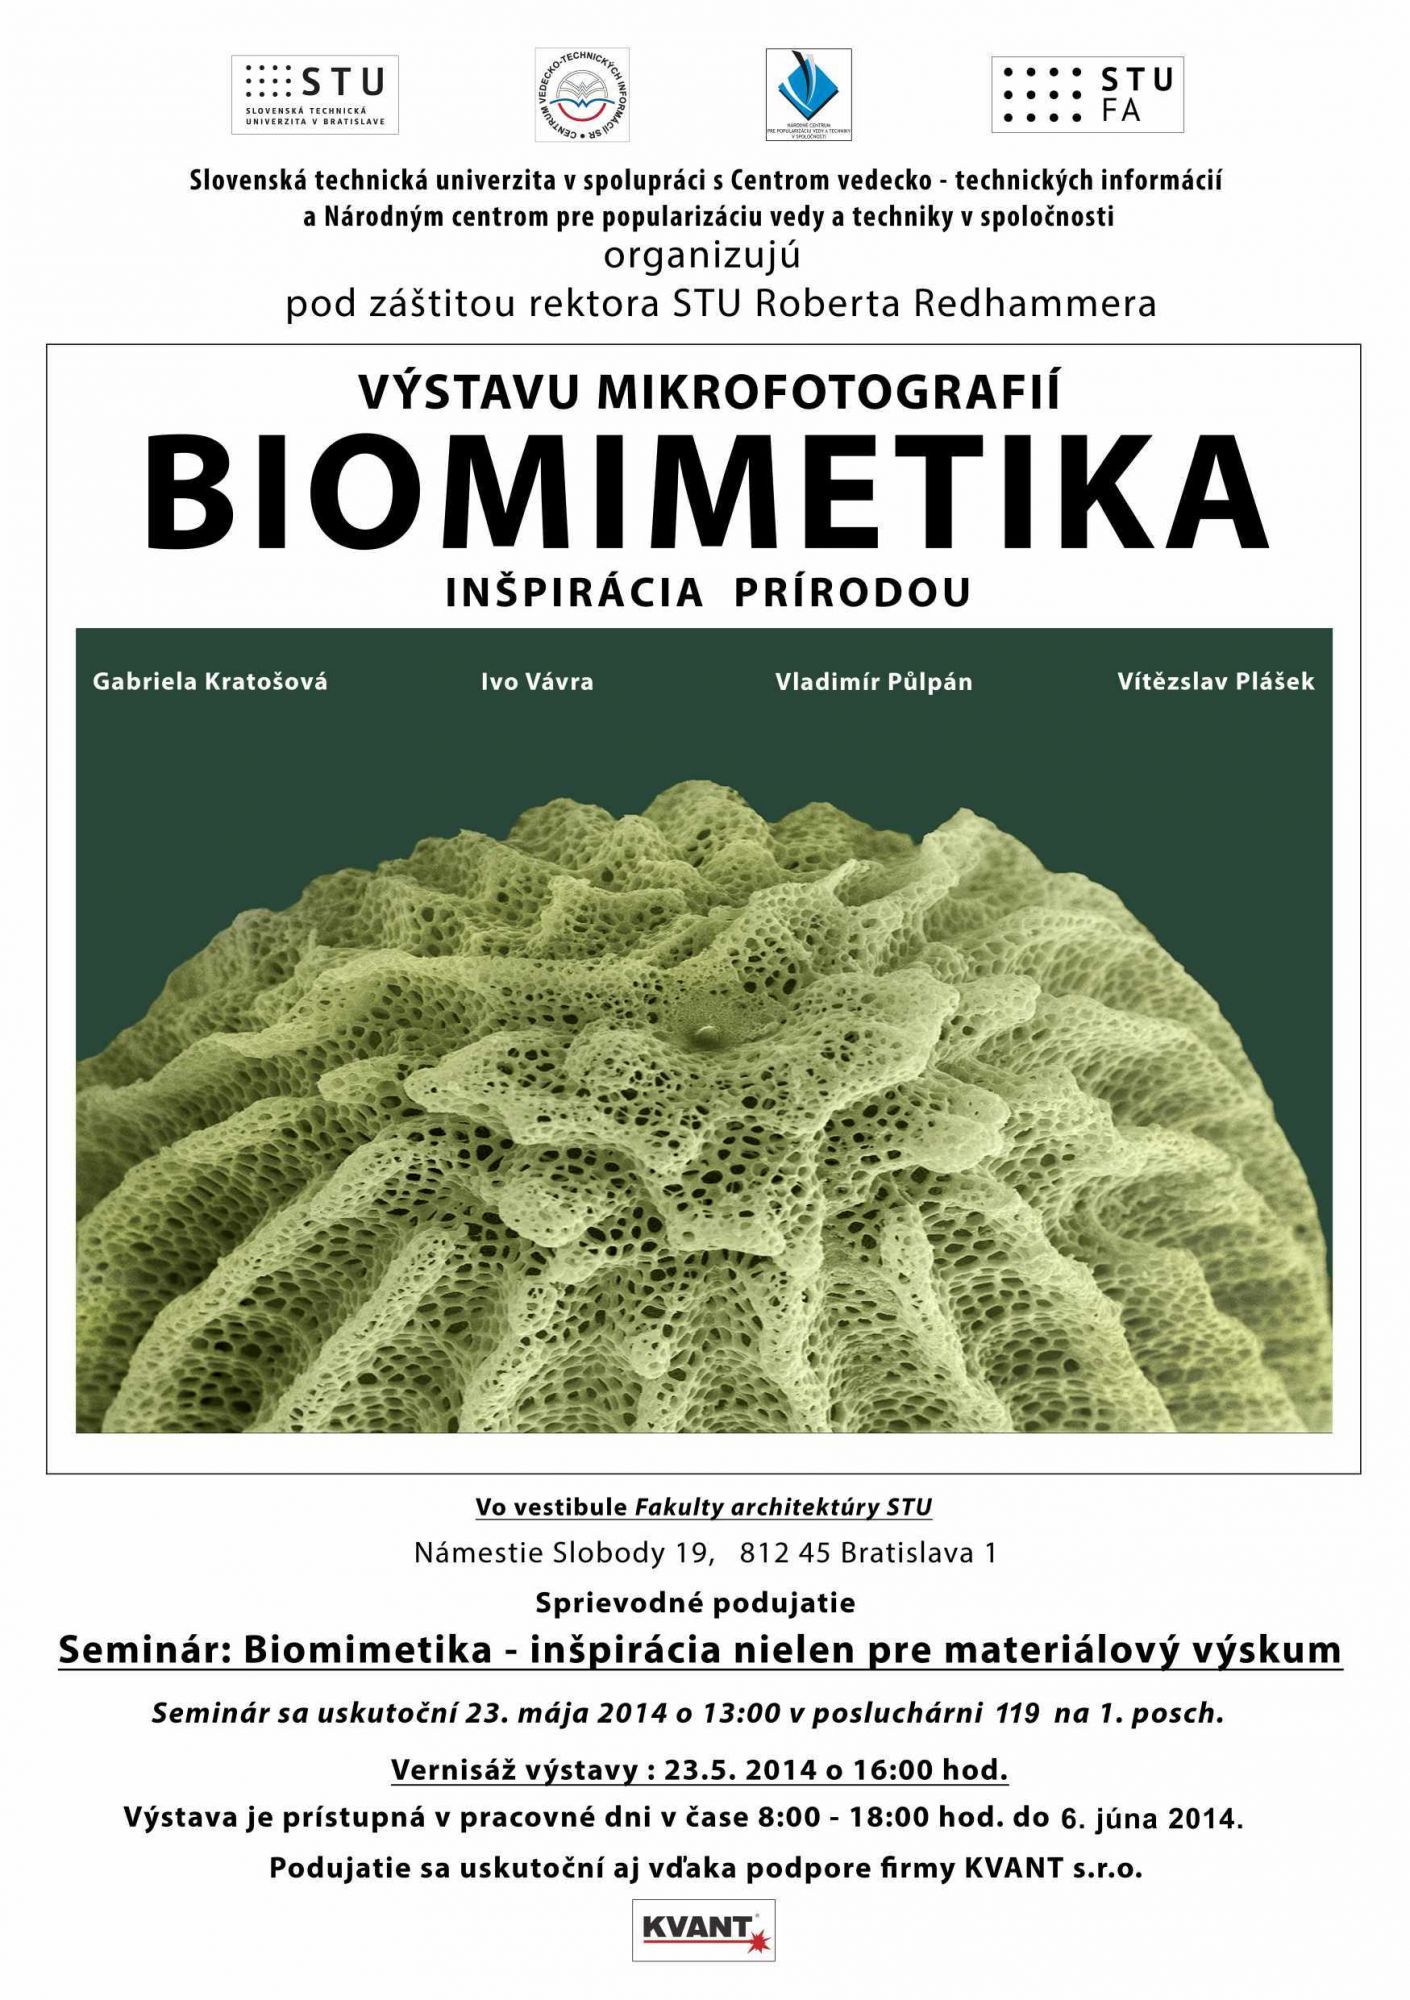 Bionimetika - výstava mikrofotografií